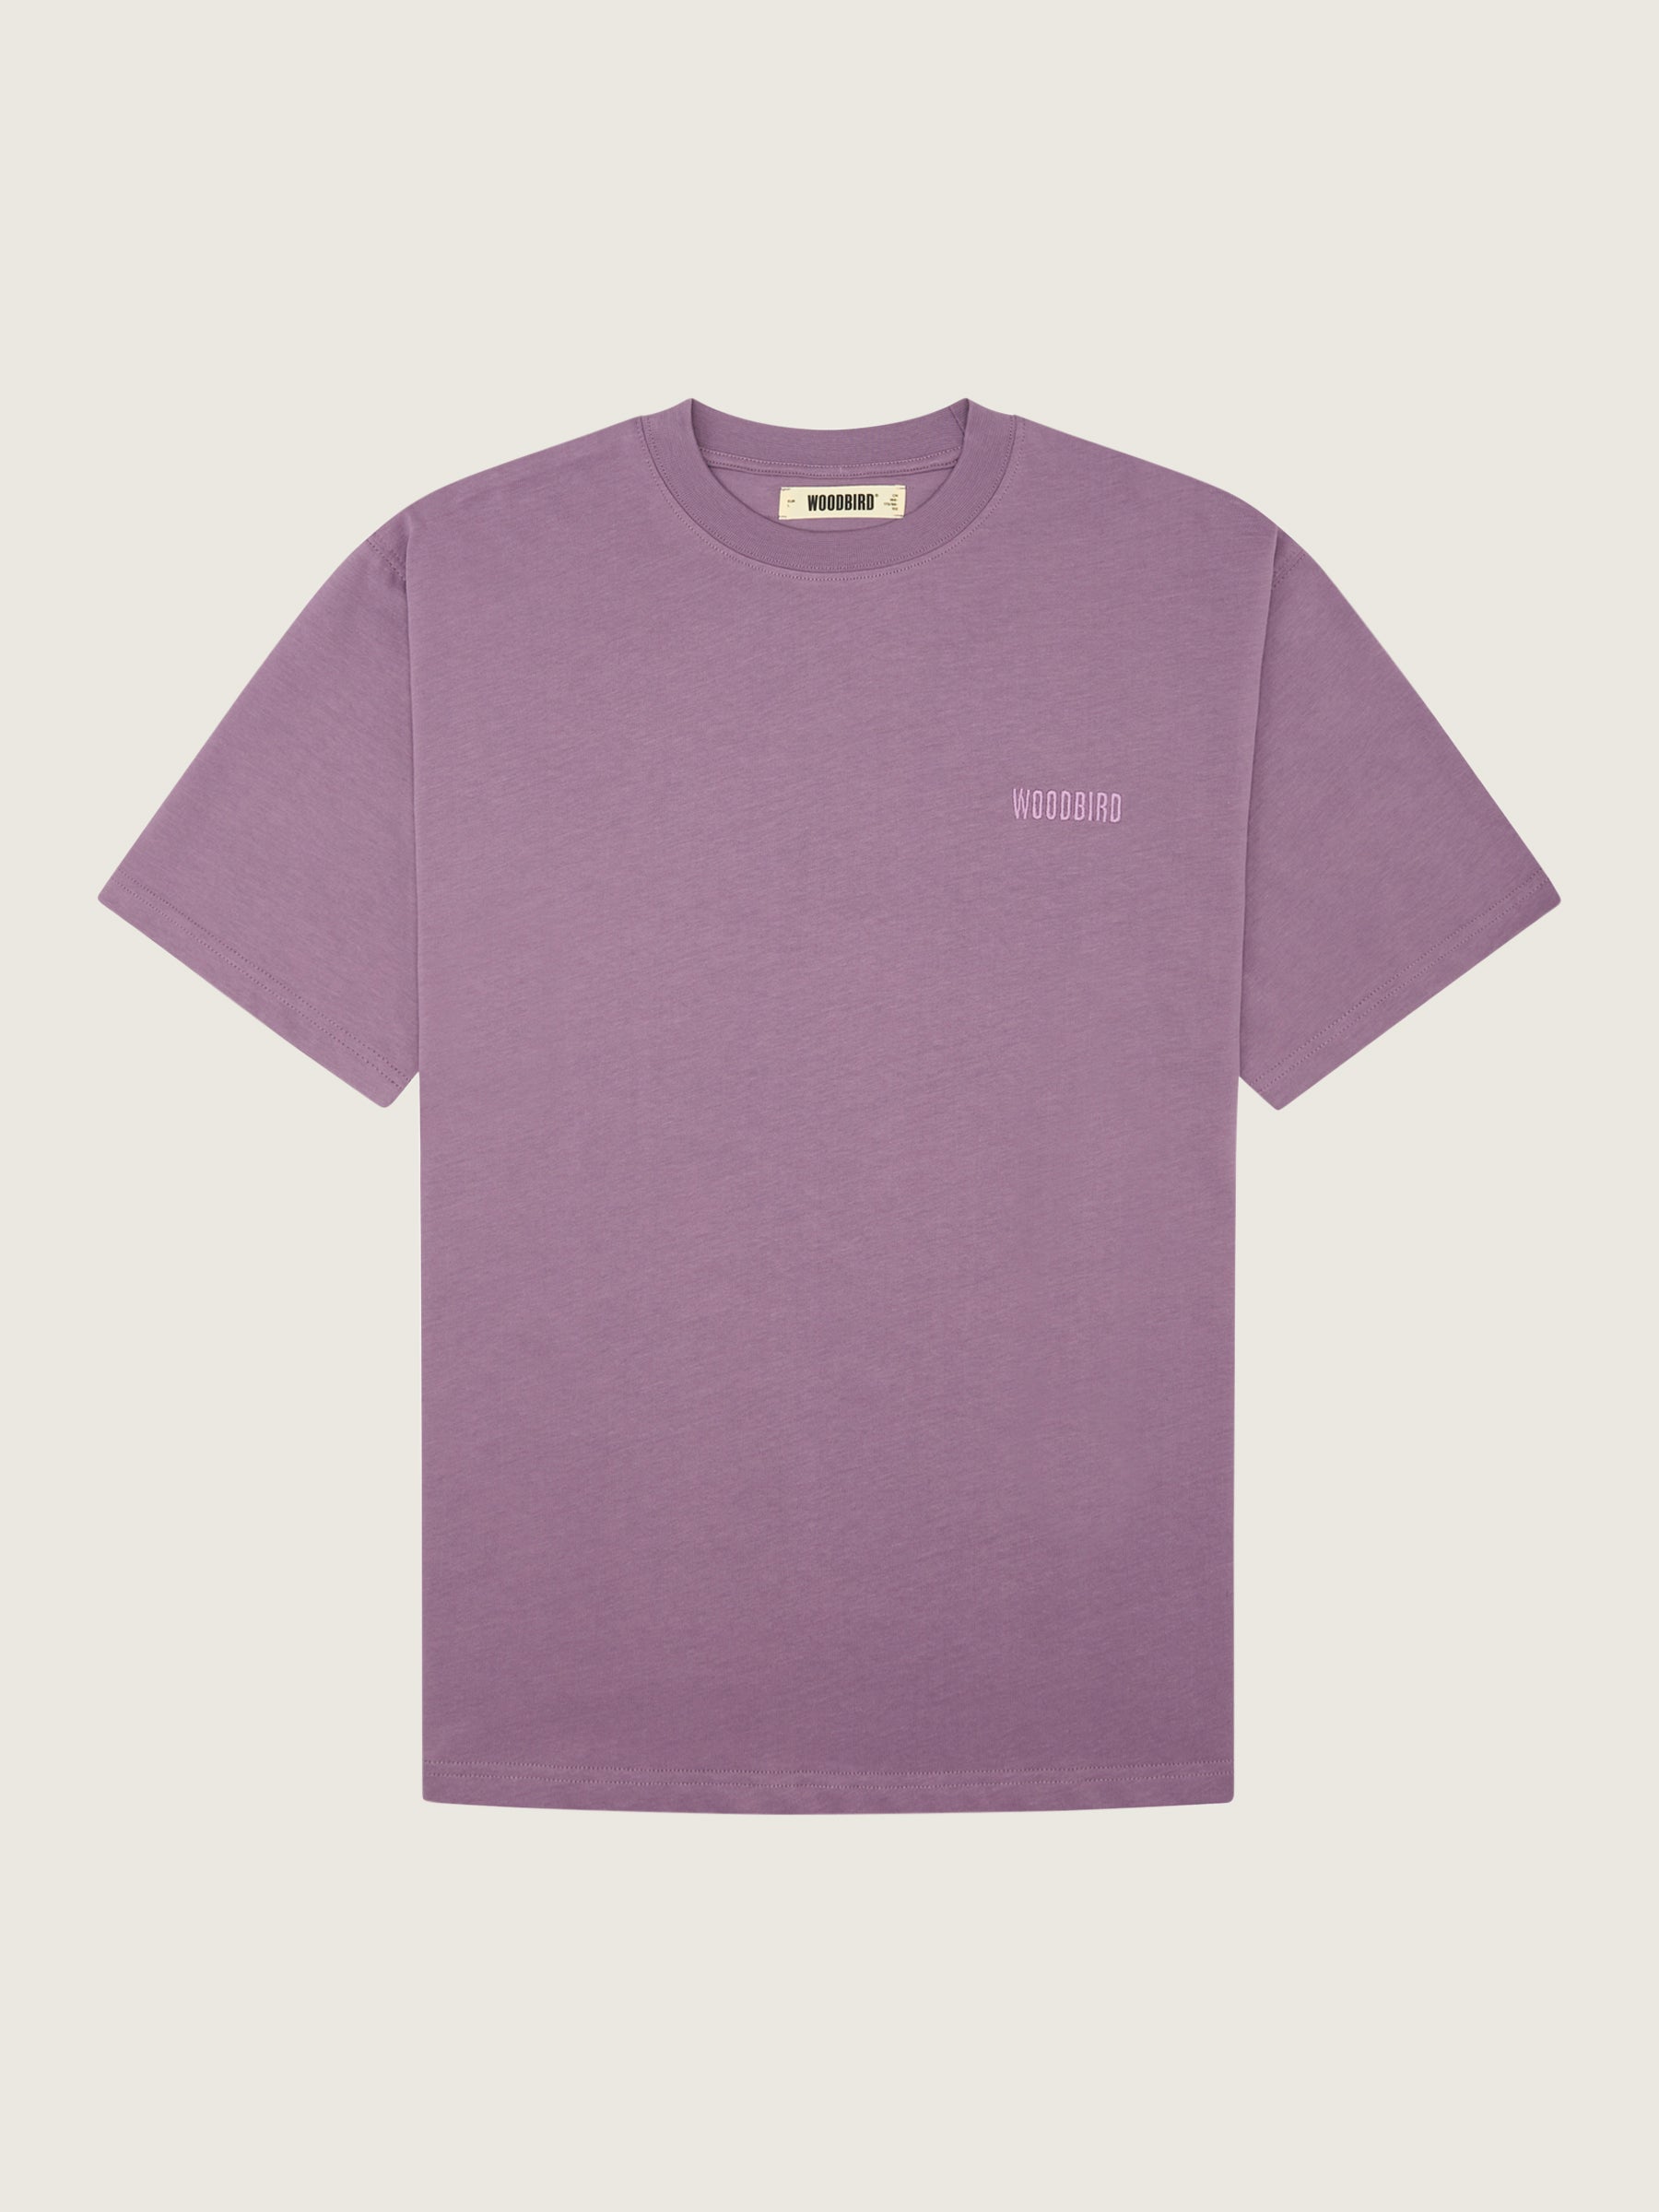 Woodbird WBBaine Base tee T-Shirts Purple